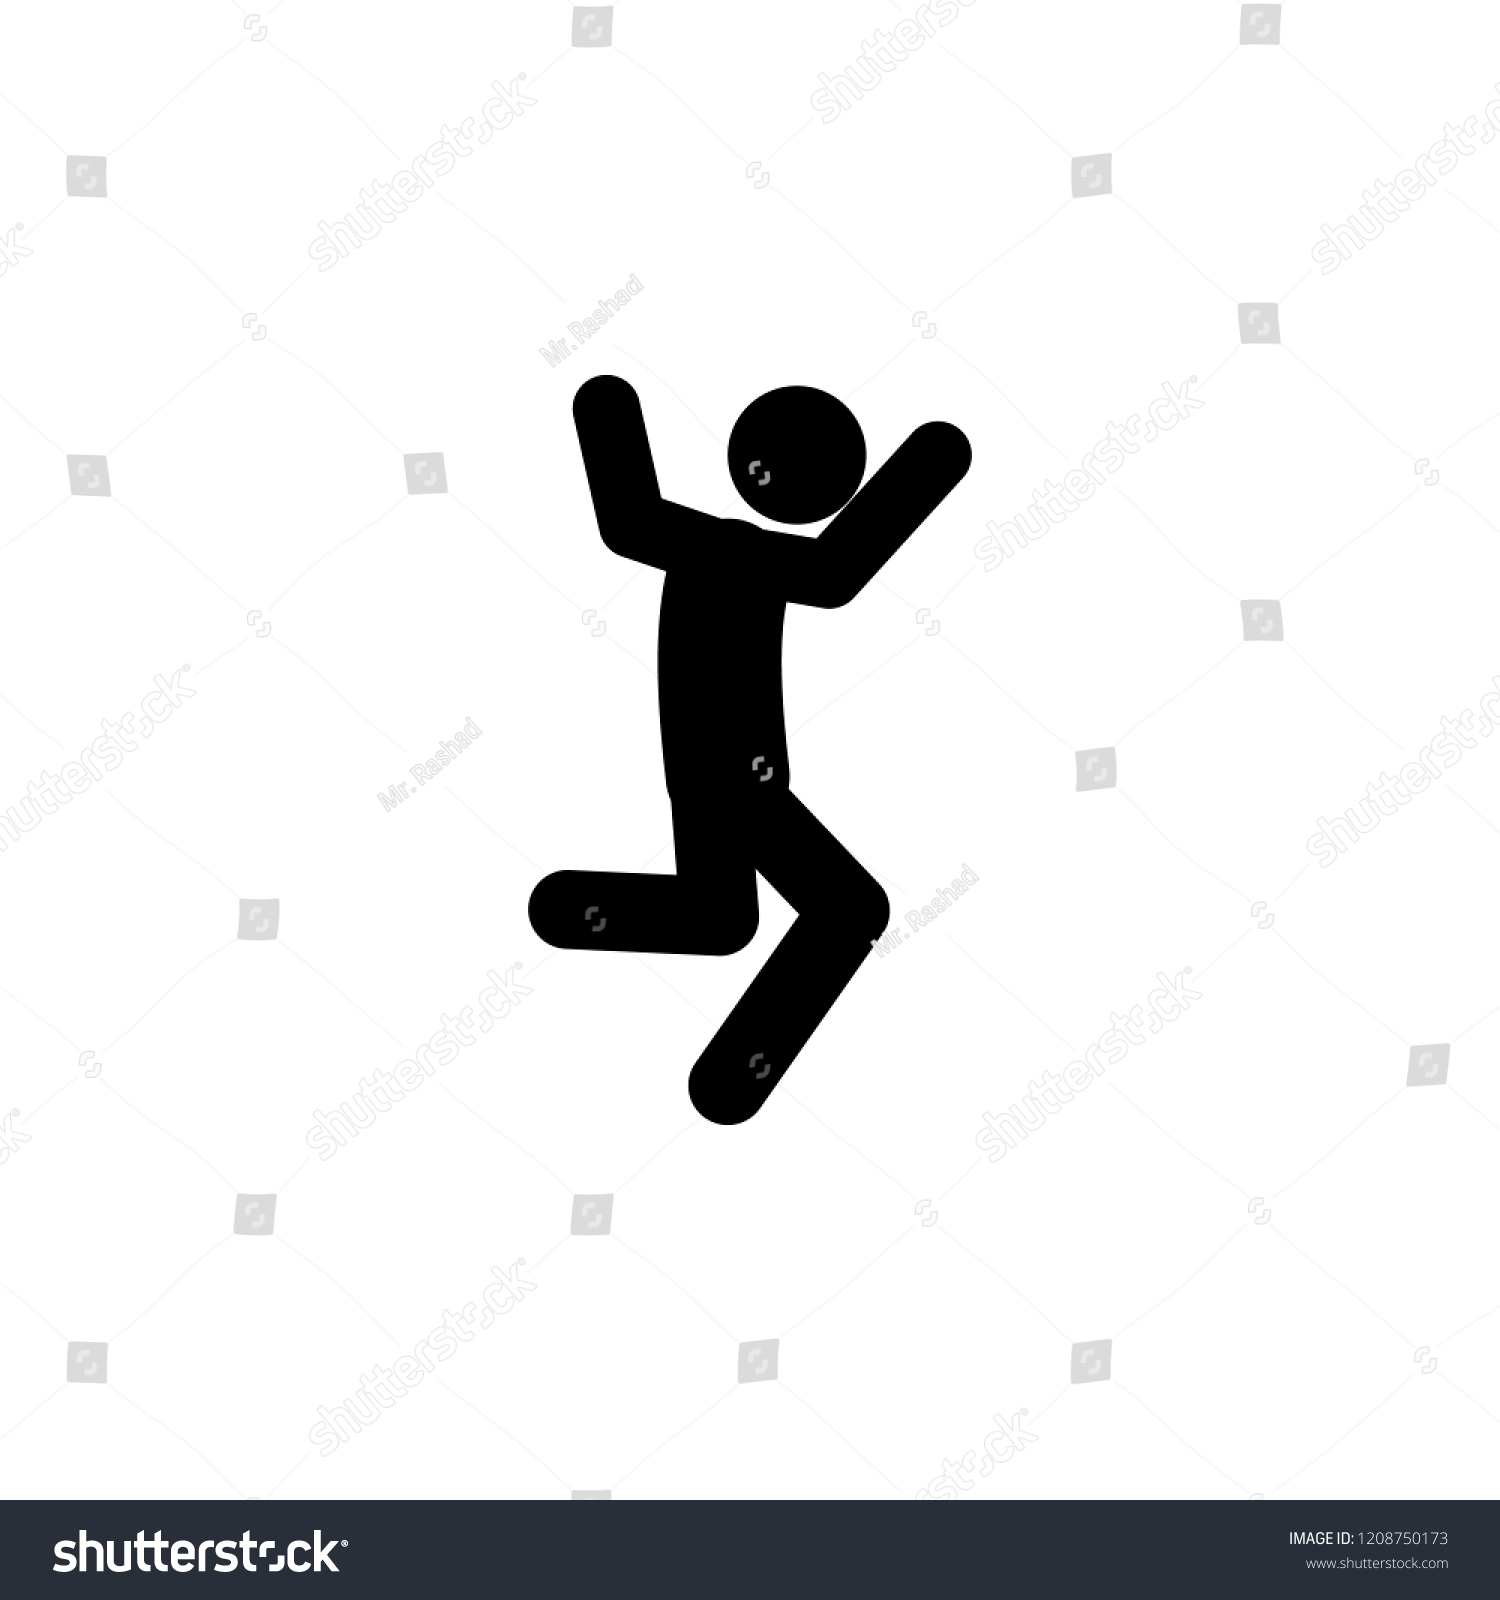 jumpman icon